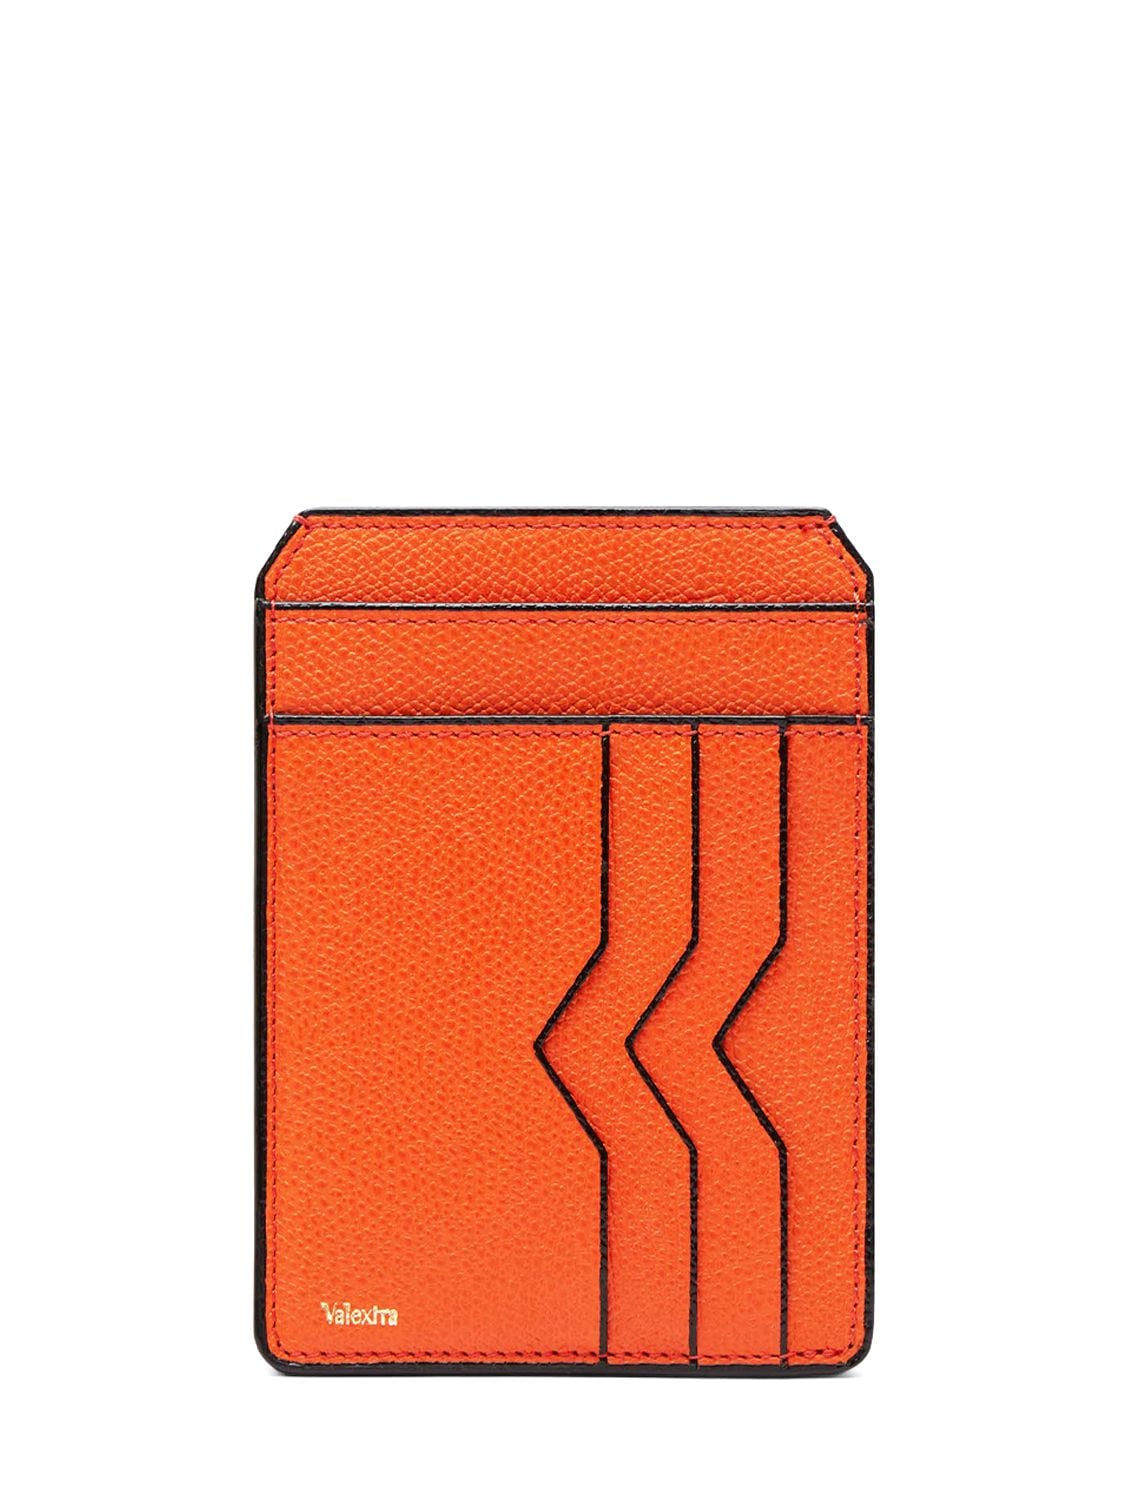 Image of Leather Credit Card Holder